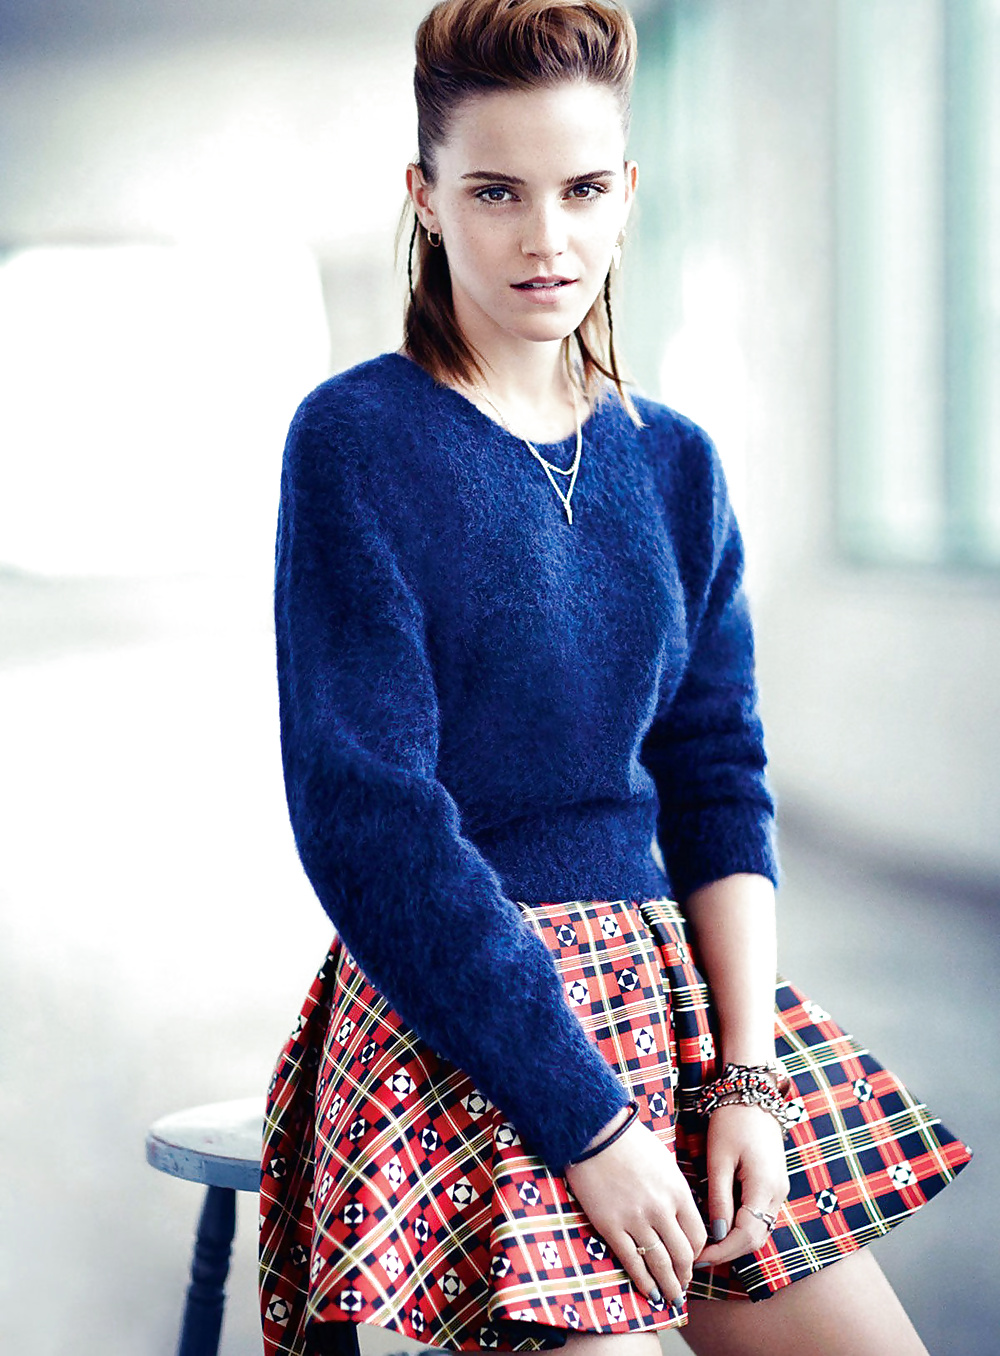 Emma Watson Sommersprossen - Teen Vogue August 2013 #29434596